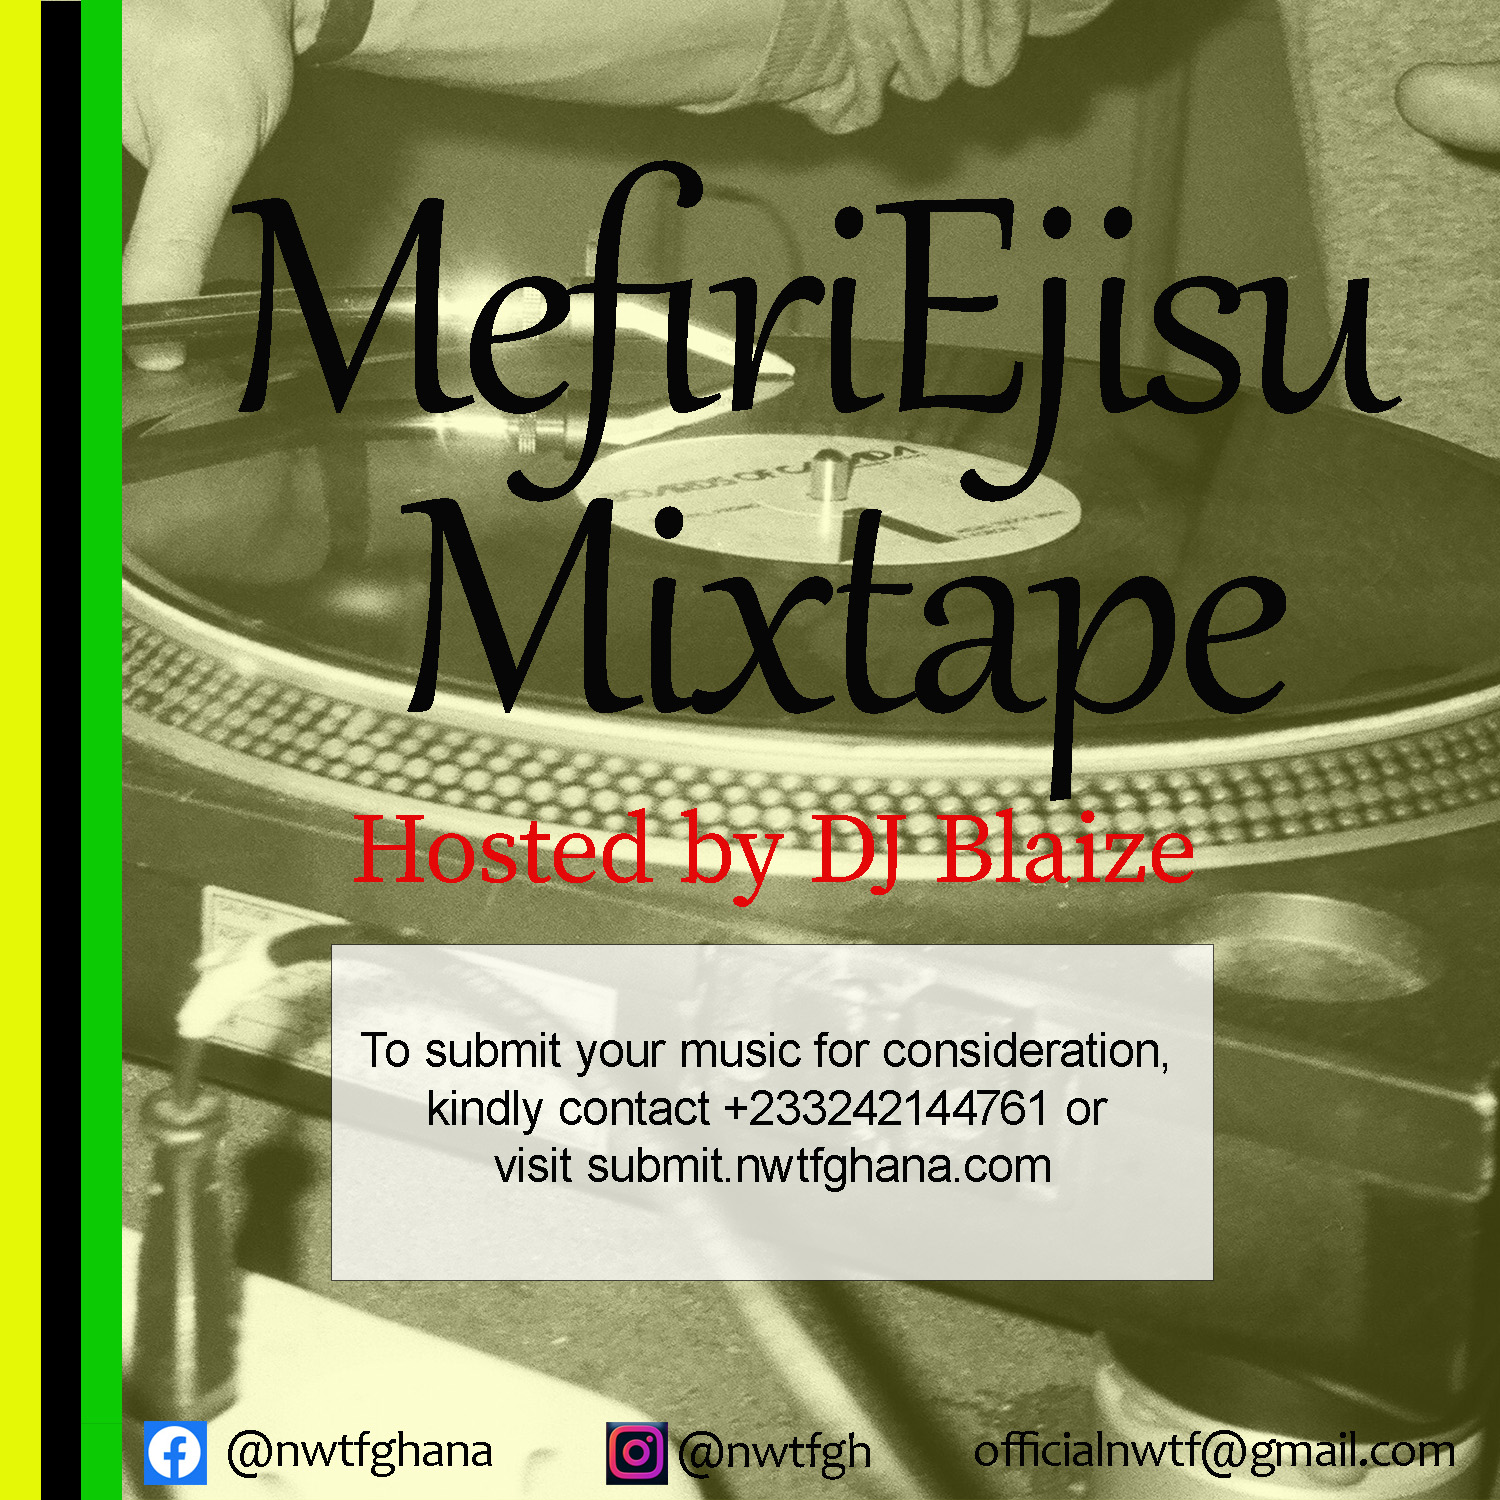 MefiriEjisu Mixtape: Call for Submission